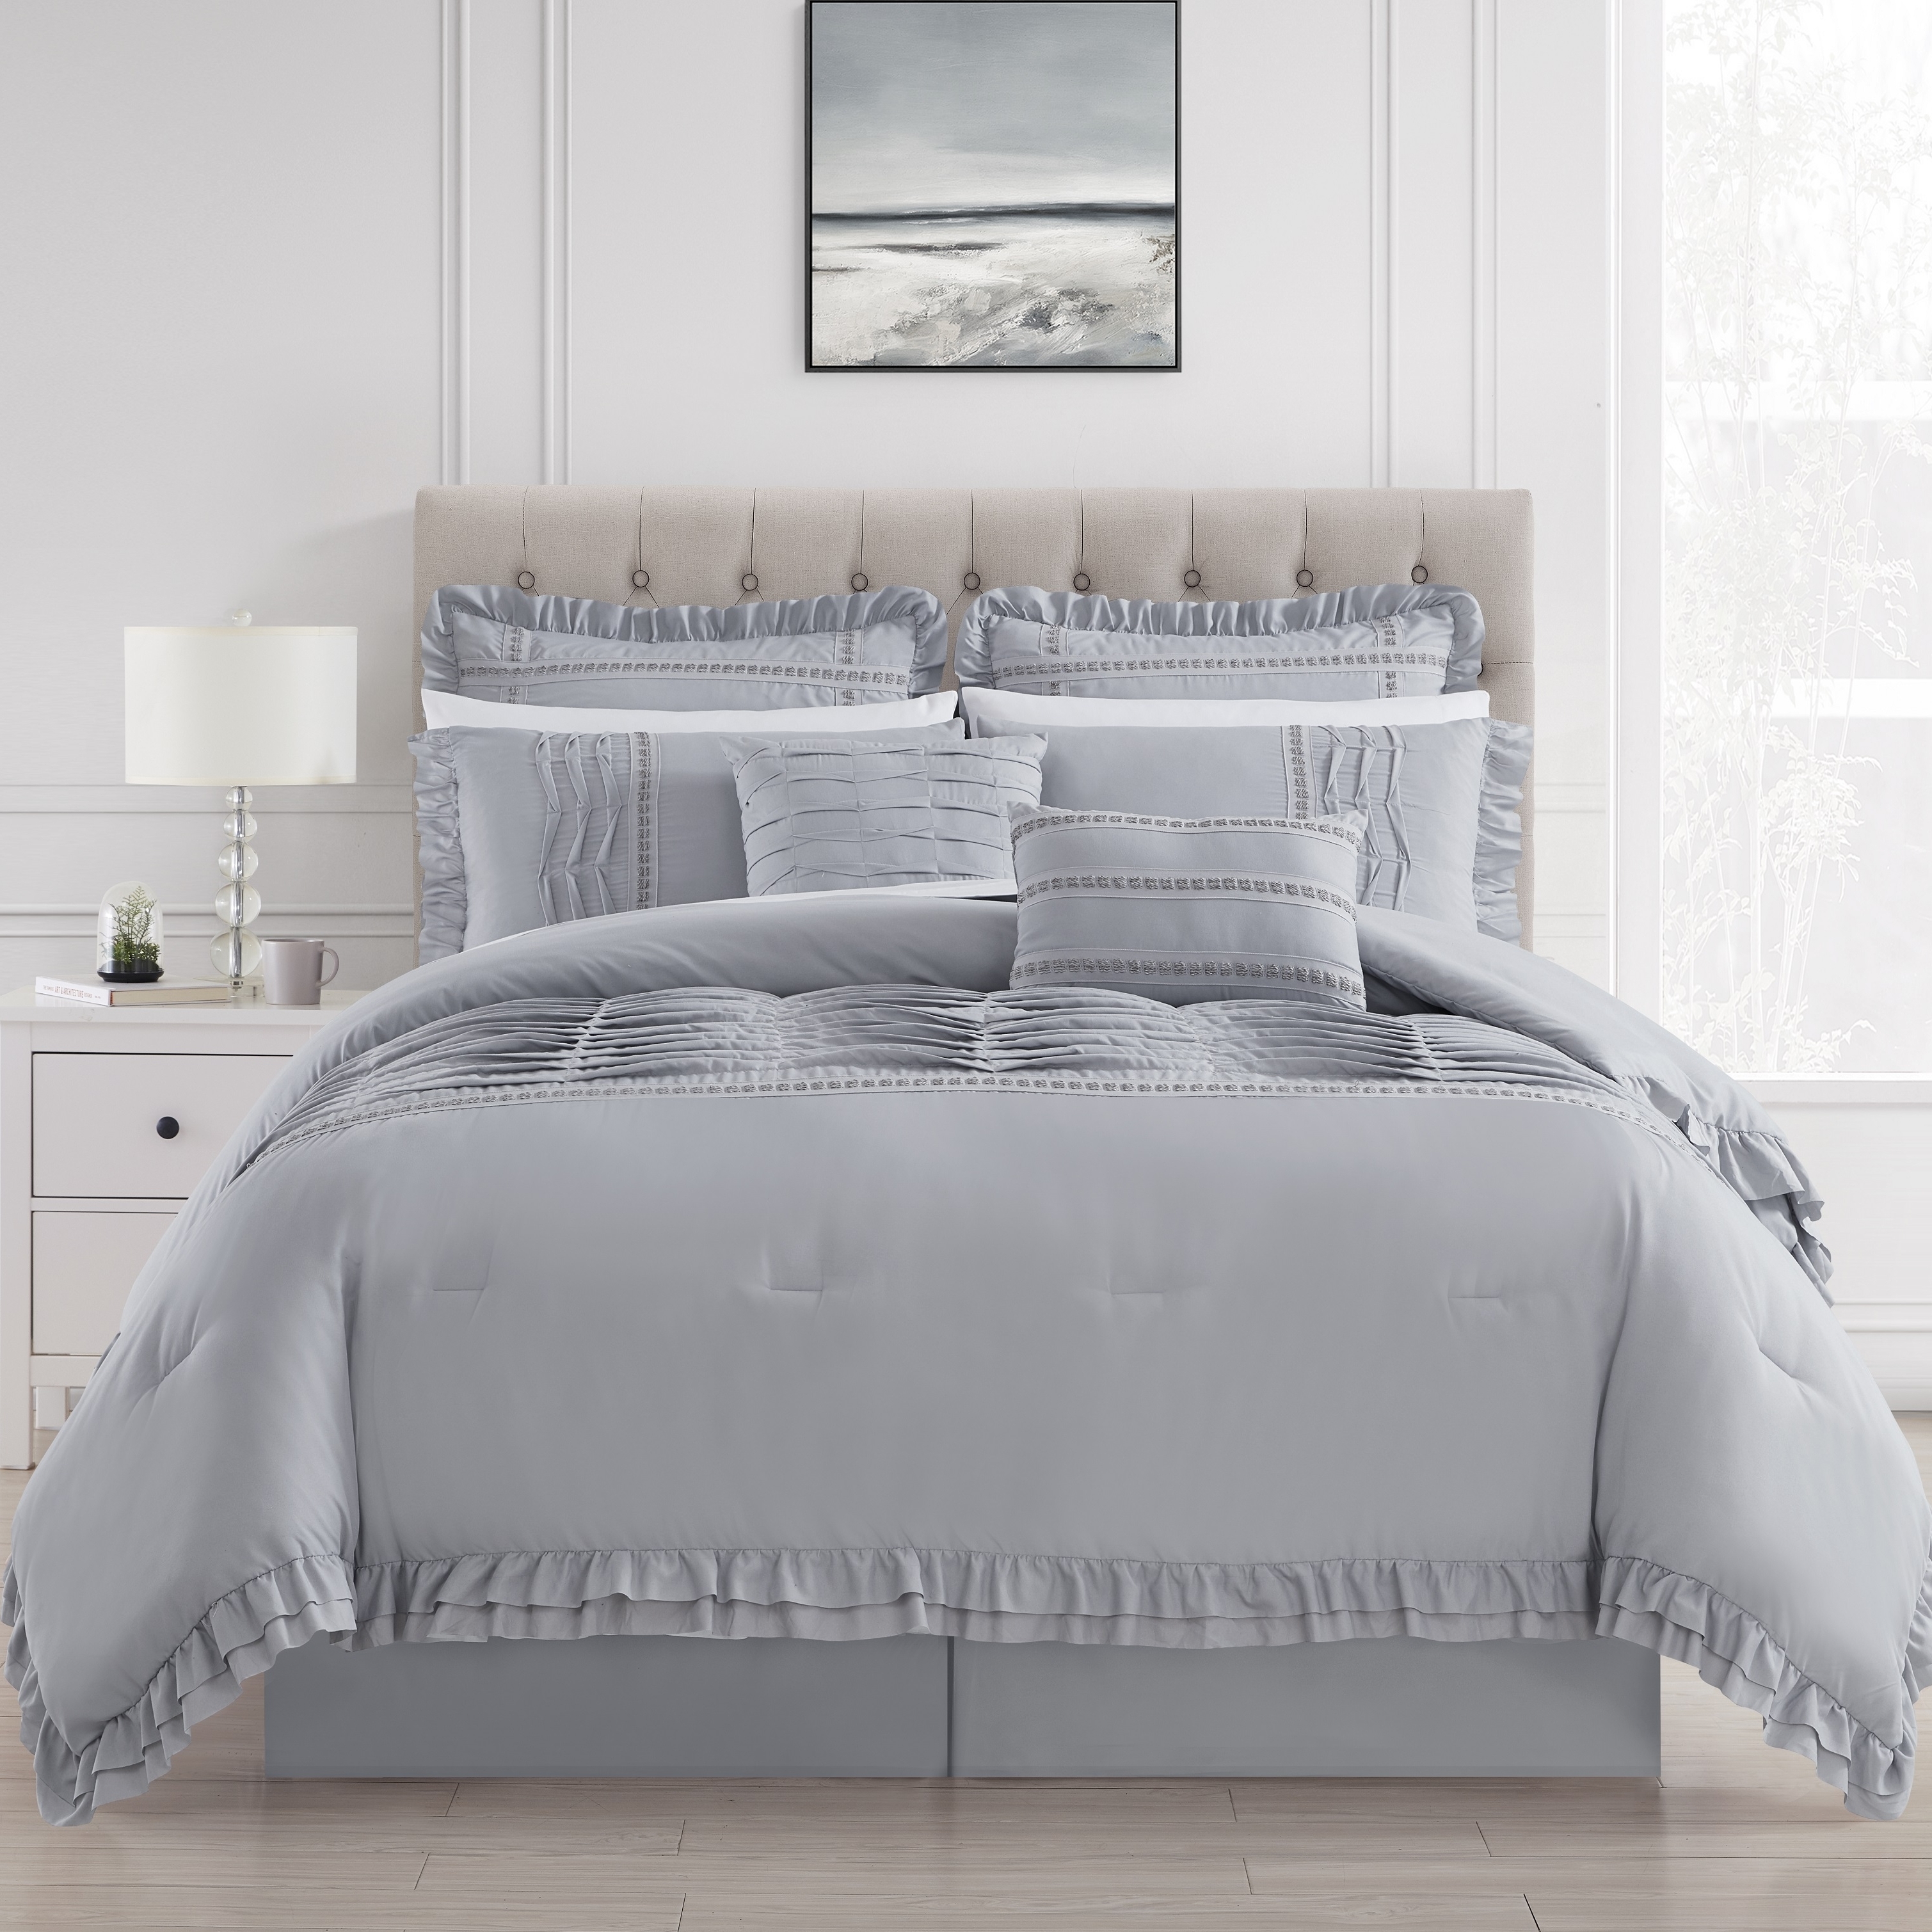 Yvonna 8 Piece Comforter Set Ruffled Pleated Flange Border Design Bedding - Grey, Queen